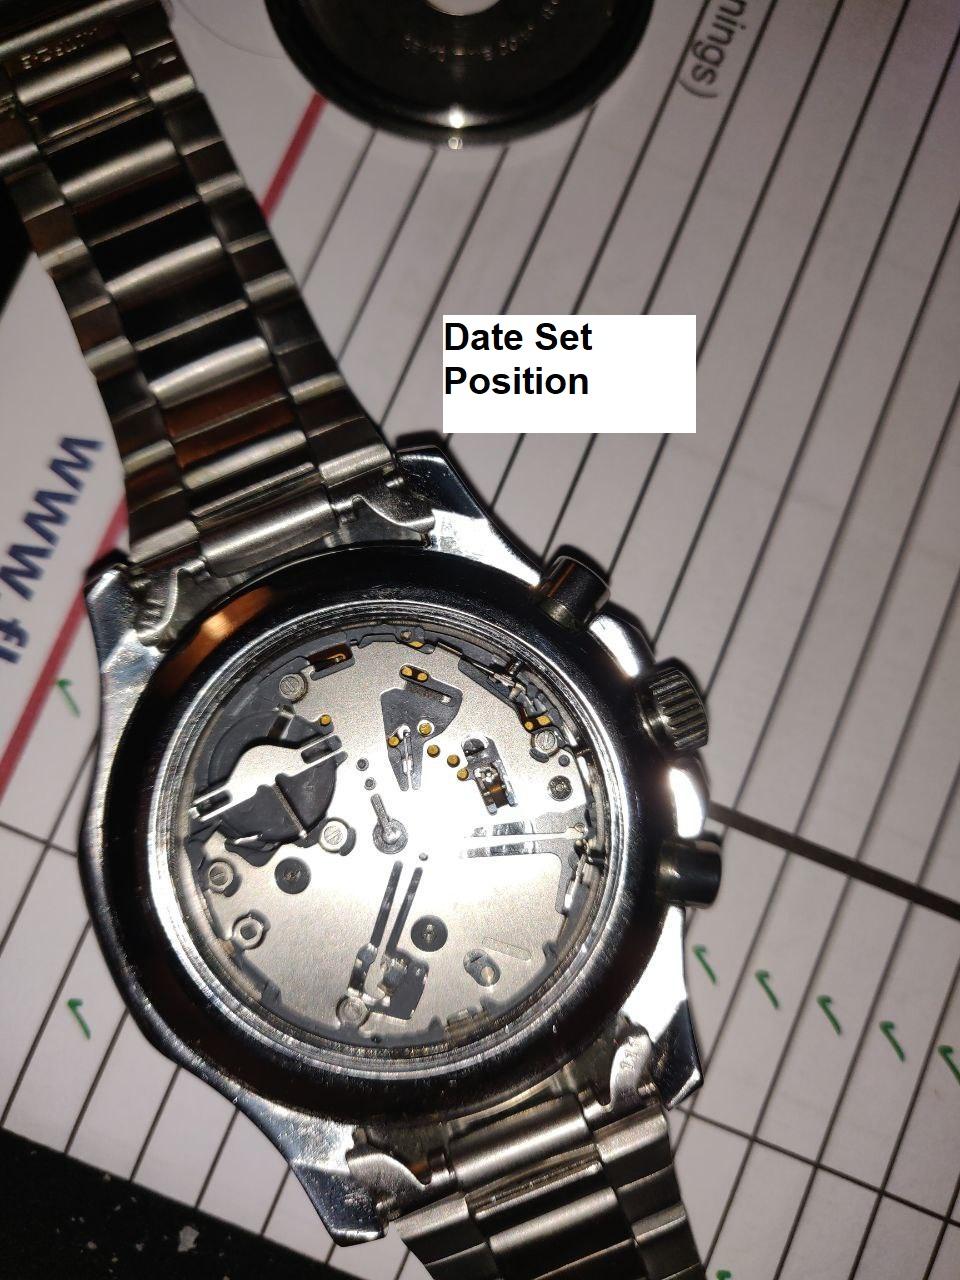 Seiko 6t63 can't set time - Watch Repairs Help & Advice - Watch Repair Talk